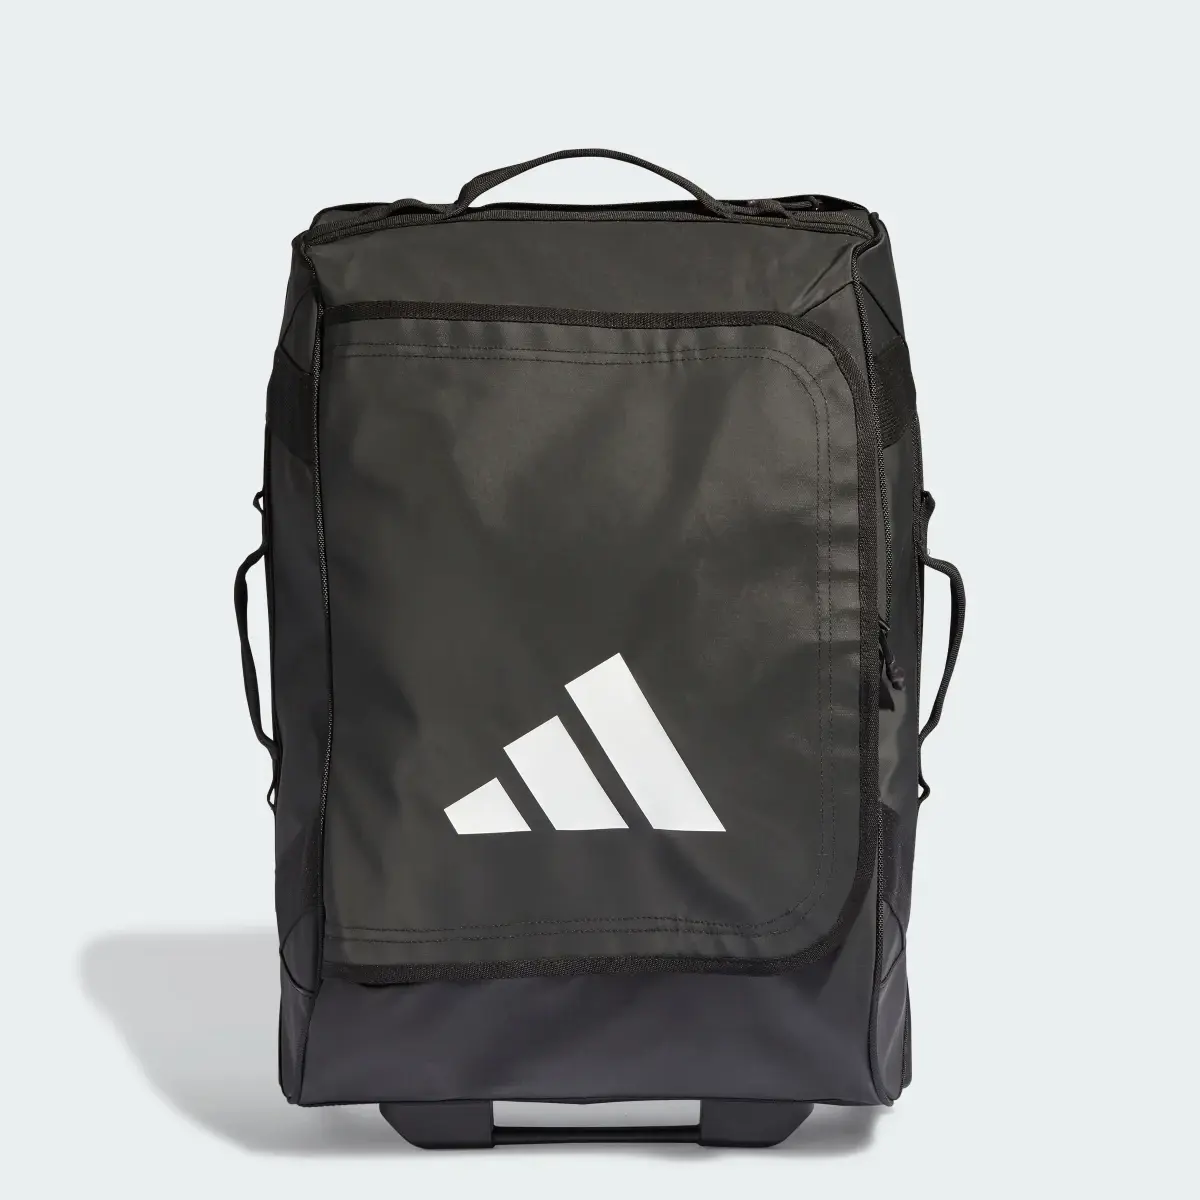 Adidas Roller Bag Small. 1